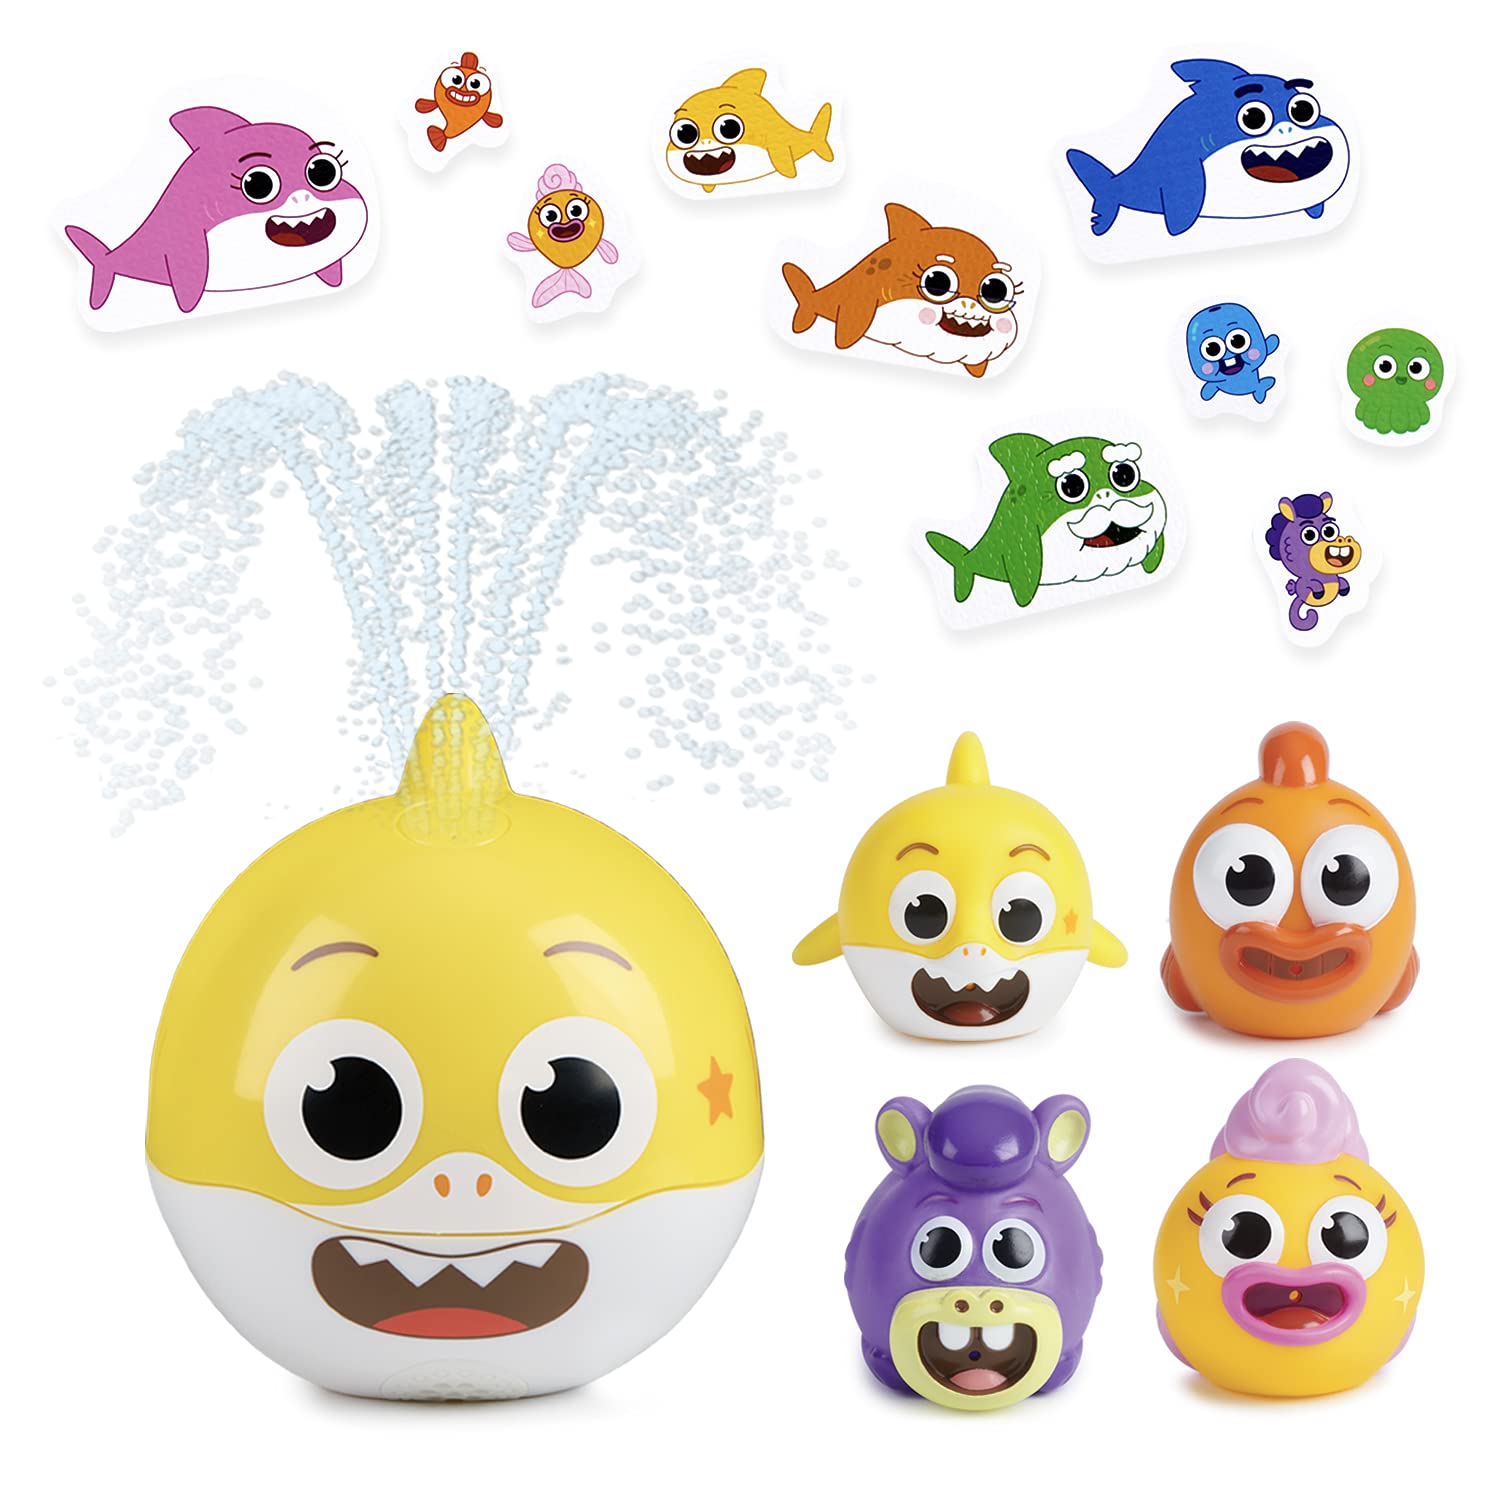 Baby Shark's Big Show! Bath Toy Bundle - 15 Pieces - Kids Bath Toys - $11.20 - Amazon